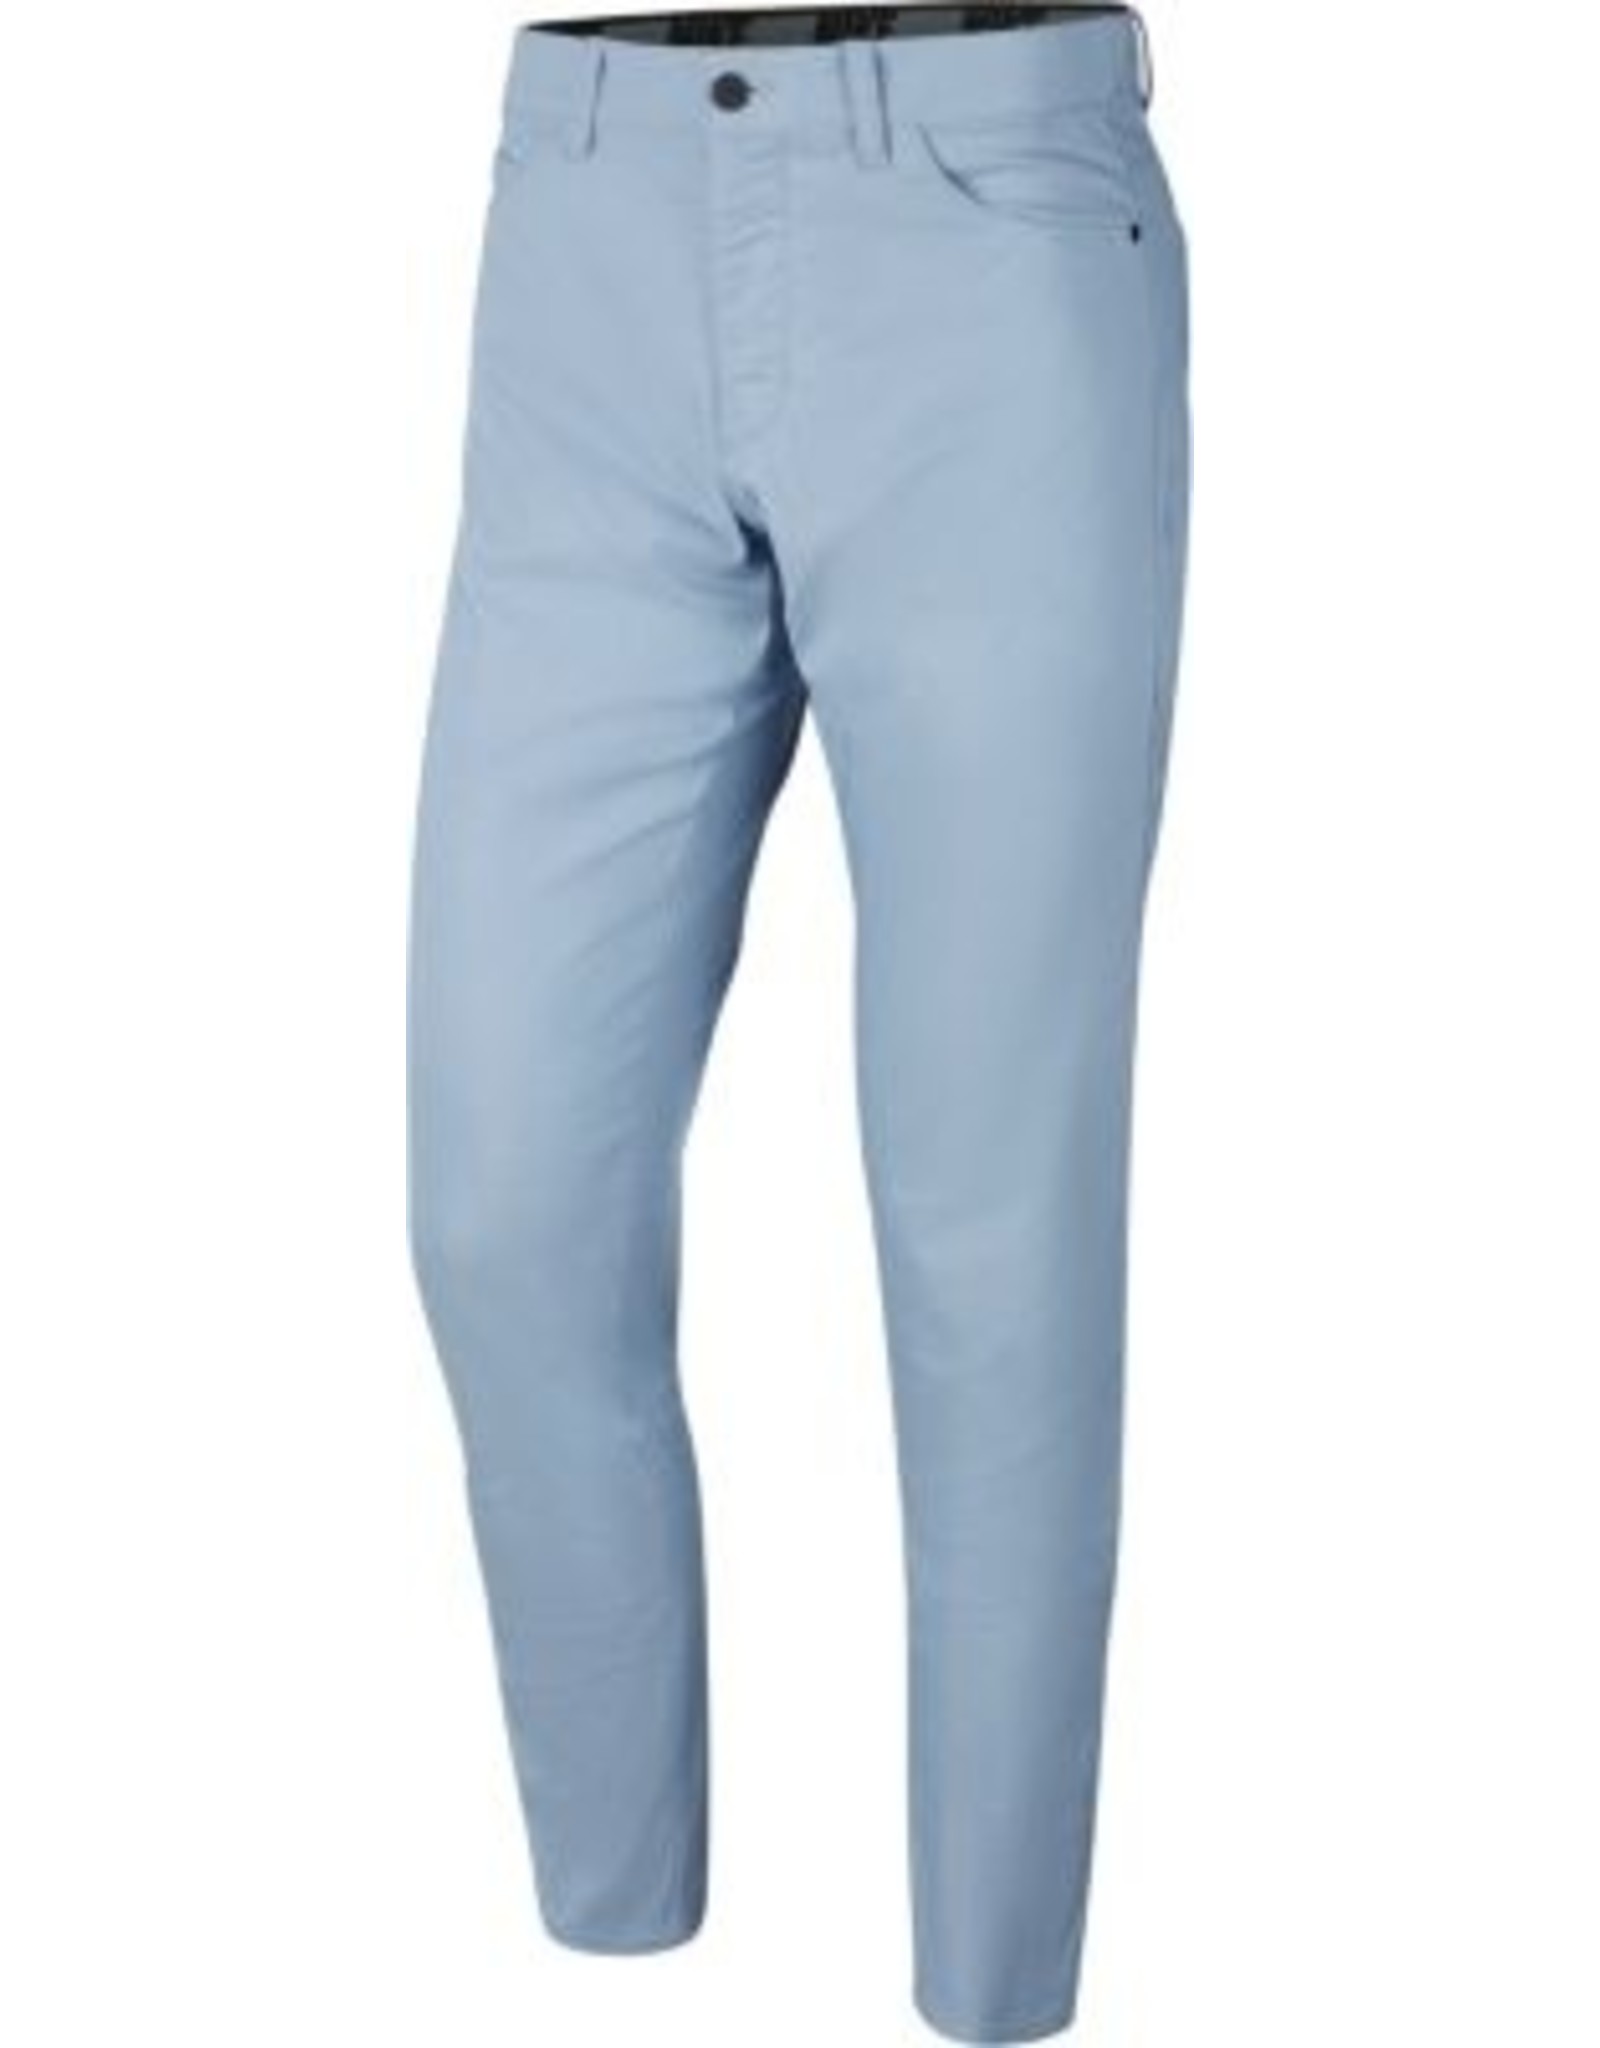 Nike Men's Flex Training Pants (Black/Dark Grey, Large) : Amazon.in: Fashion